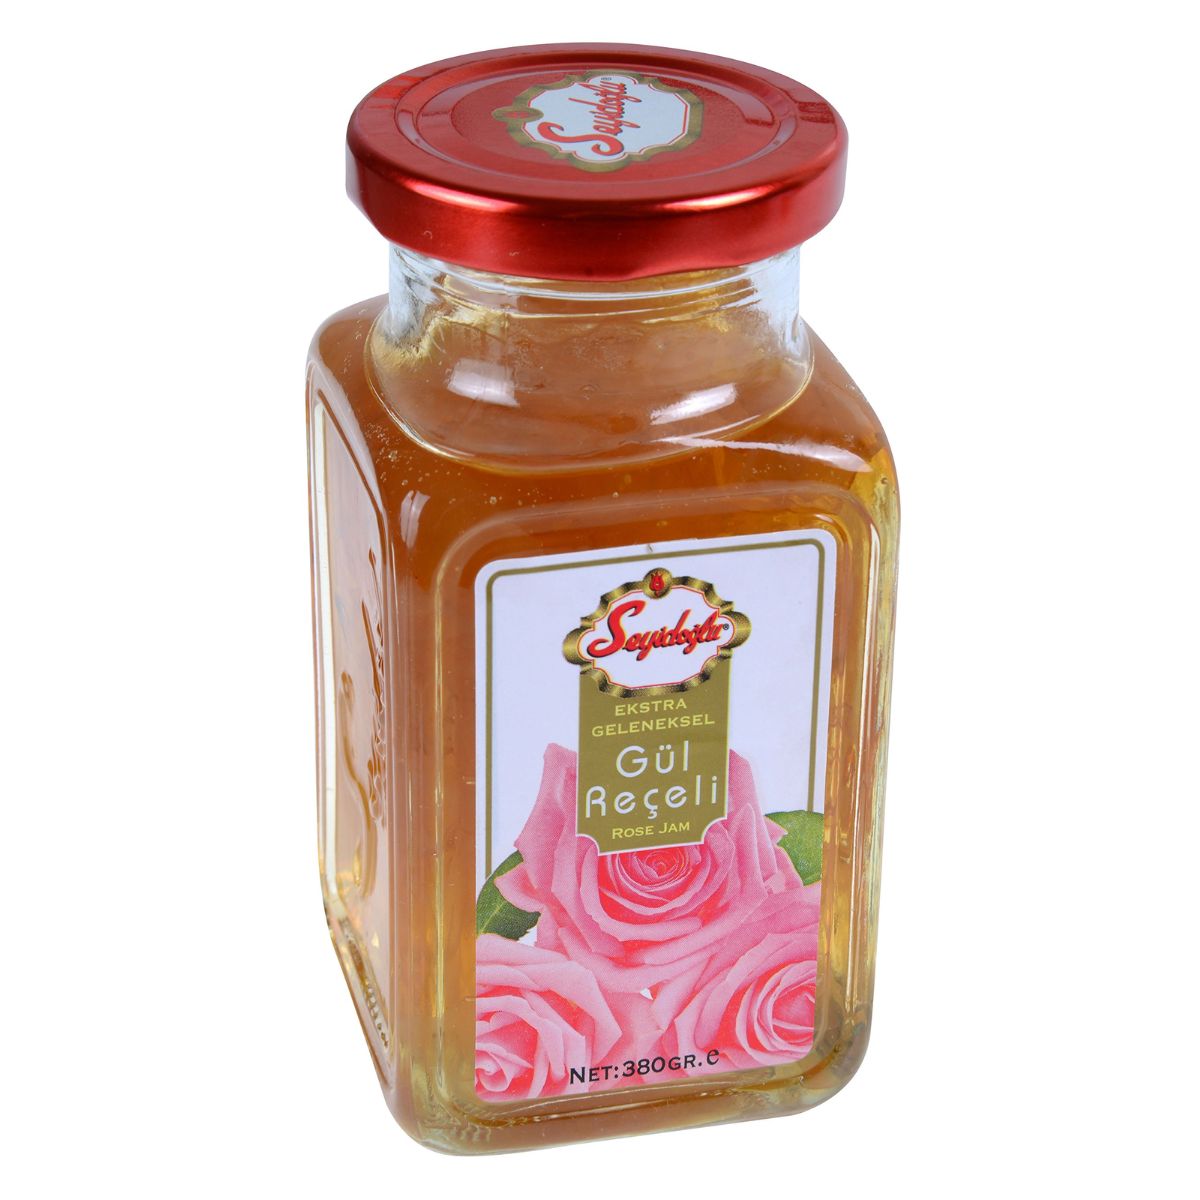 A jar of Seyidoglu - Rose Jam - 380g on a white background.